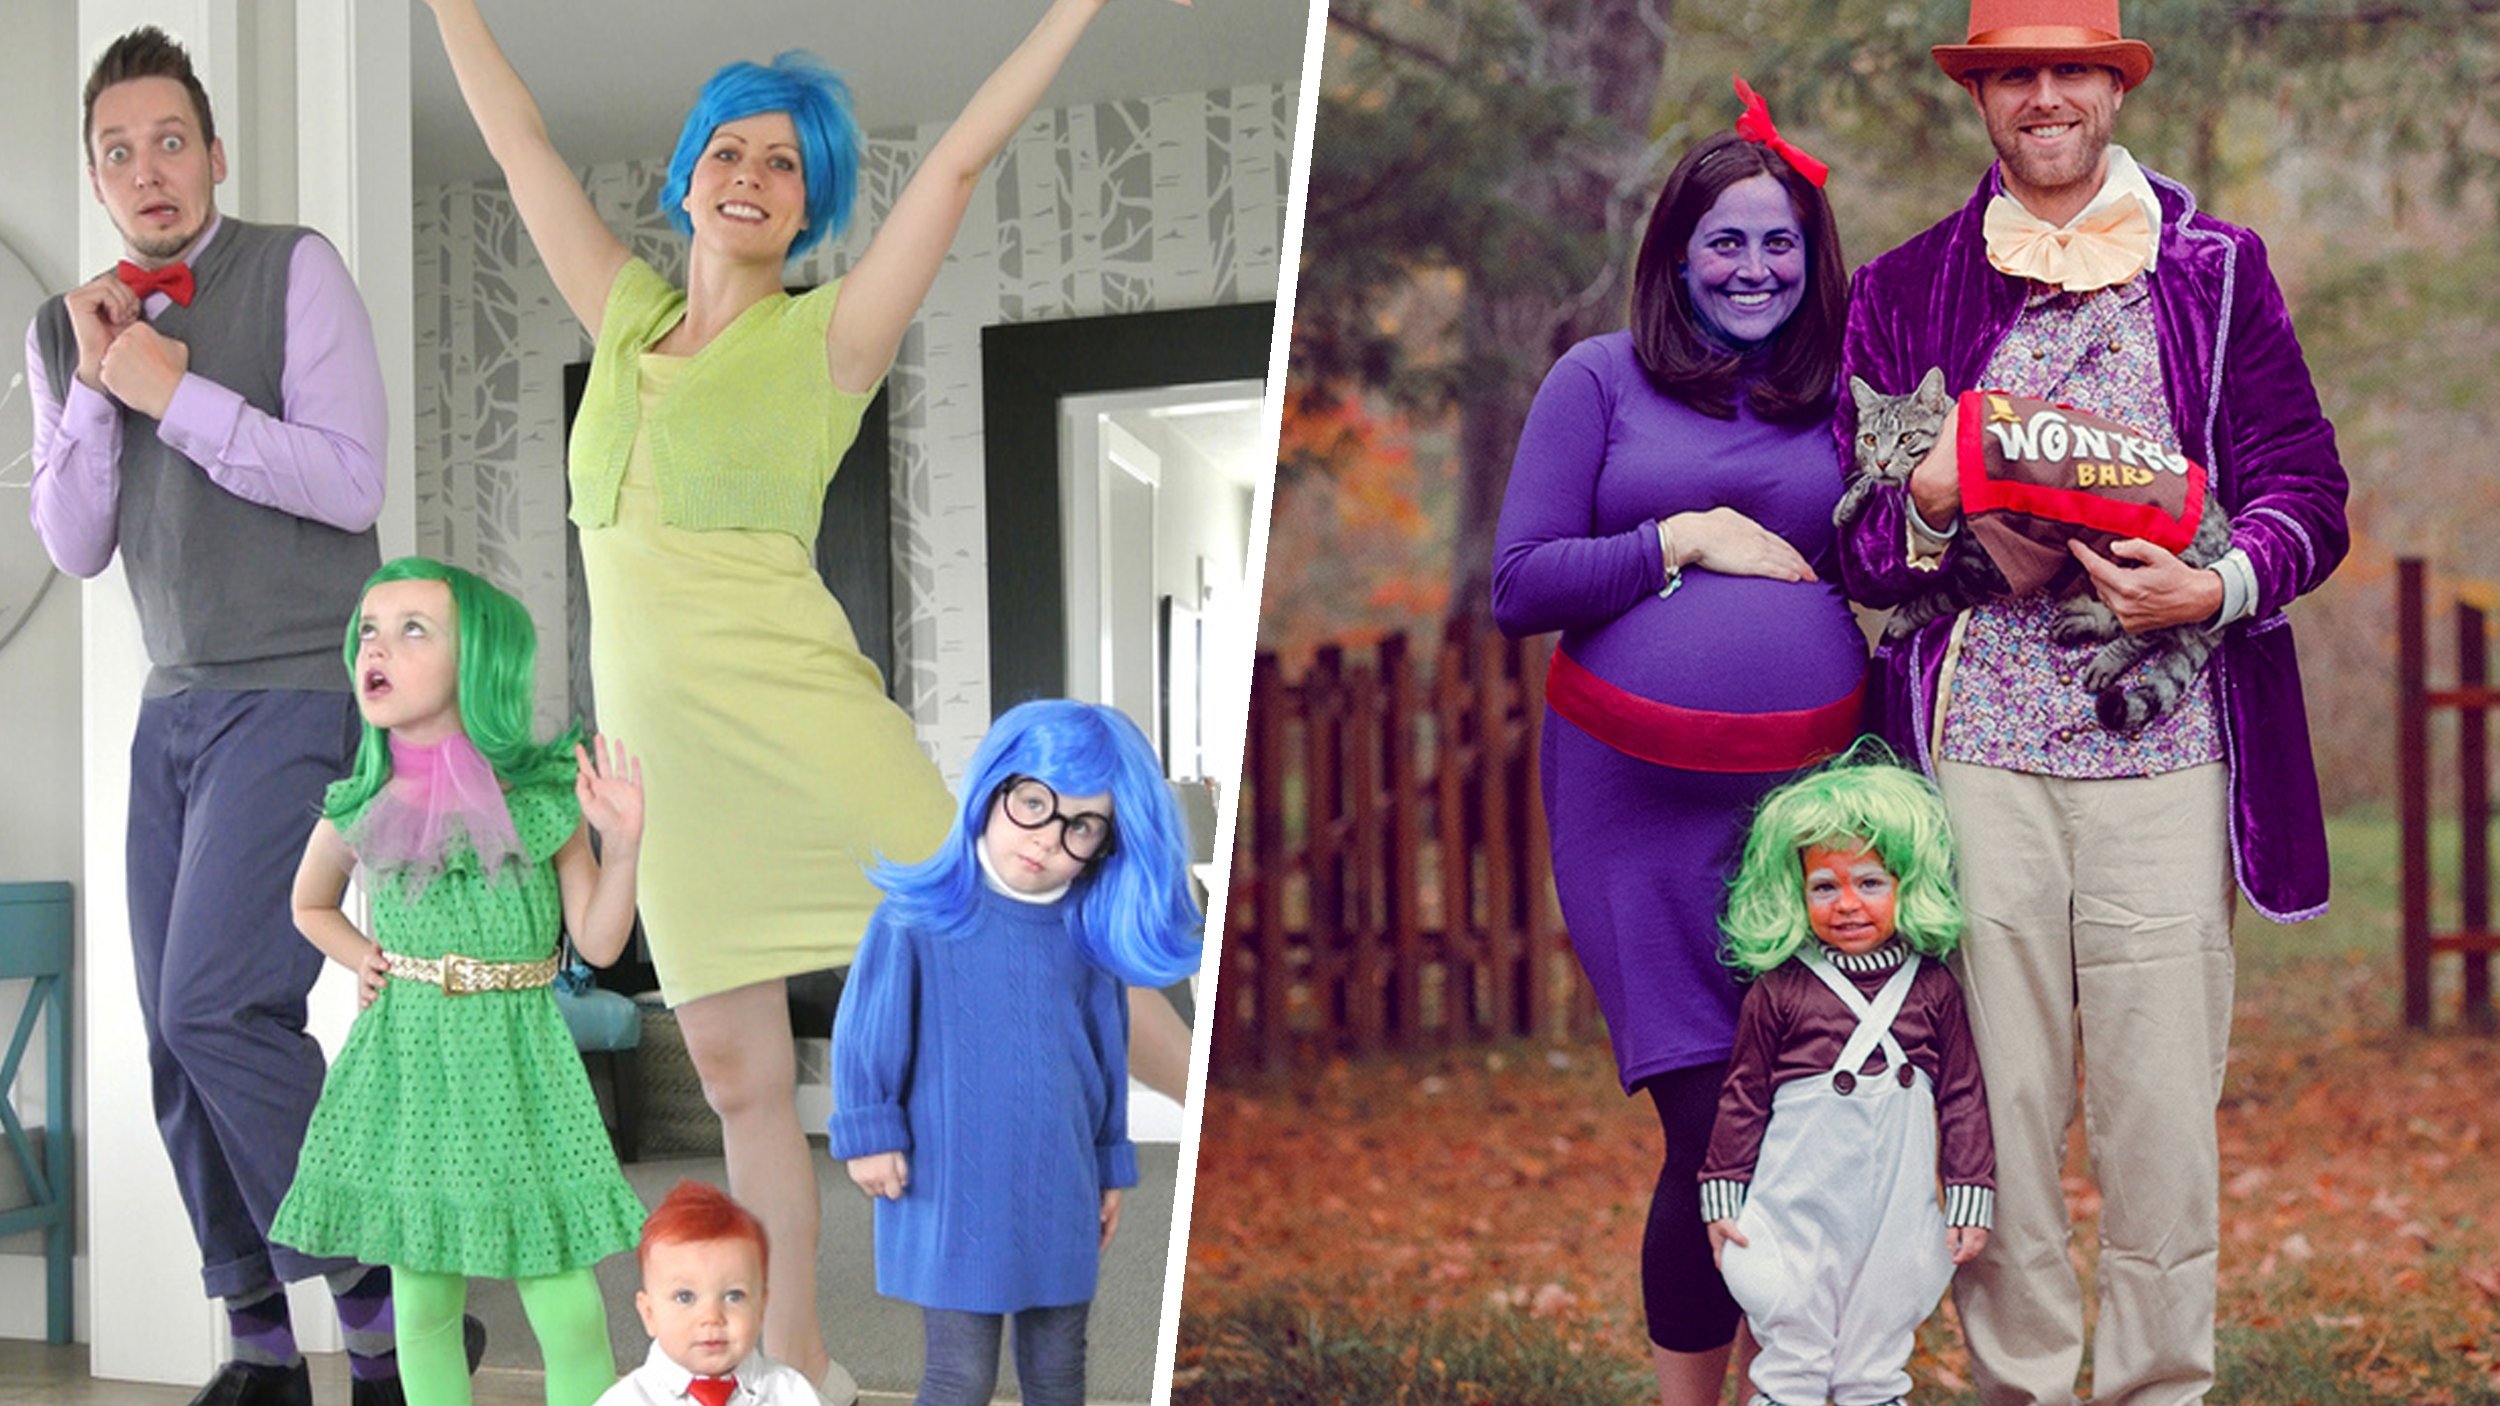 10 Stylish Family Of 4 Halloween Costume Ideas family halloween costumes 8 pinterest ideas to inspire you today 1 2022